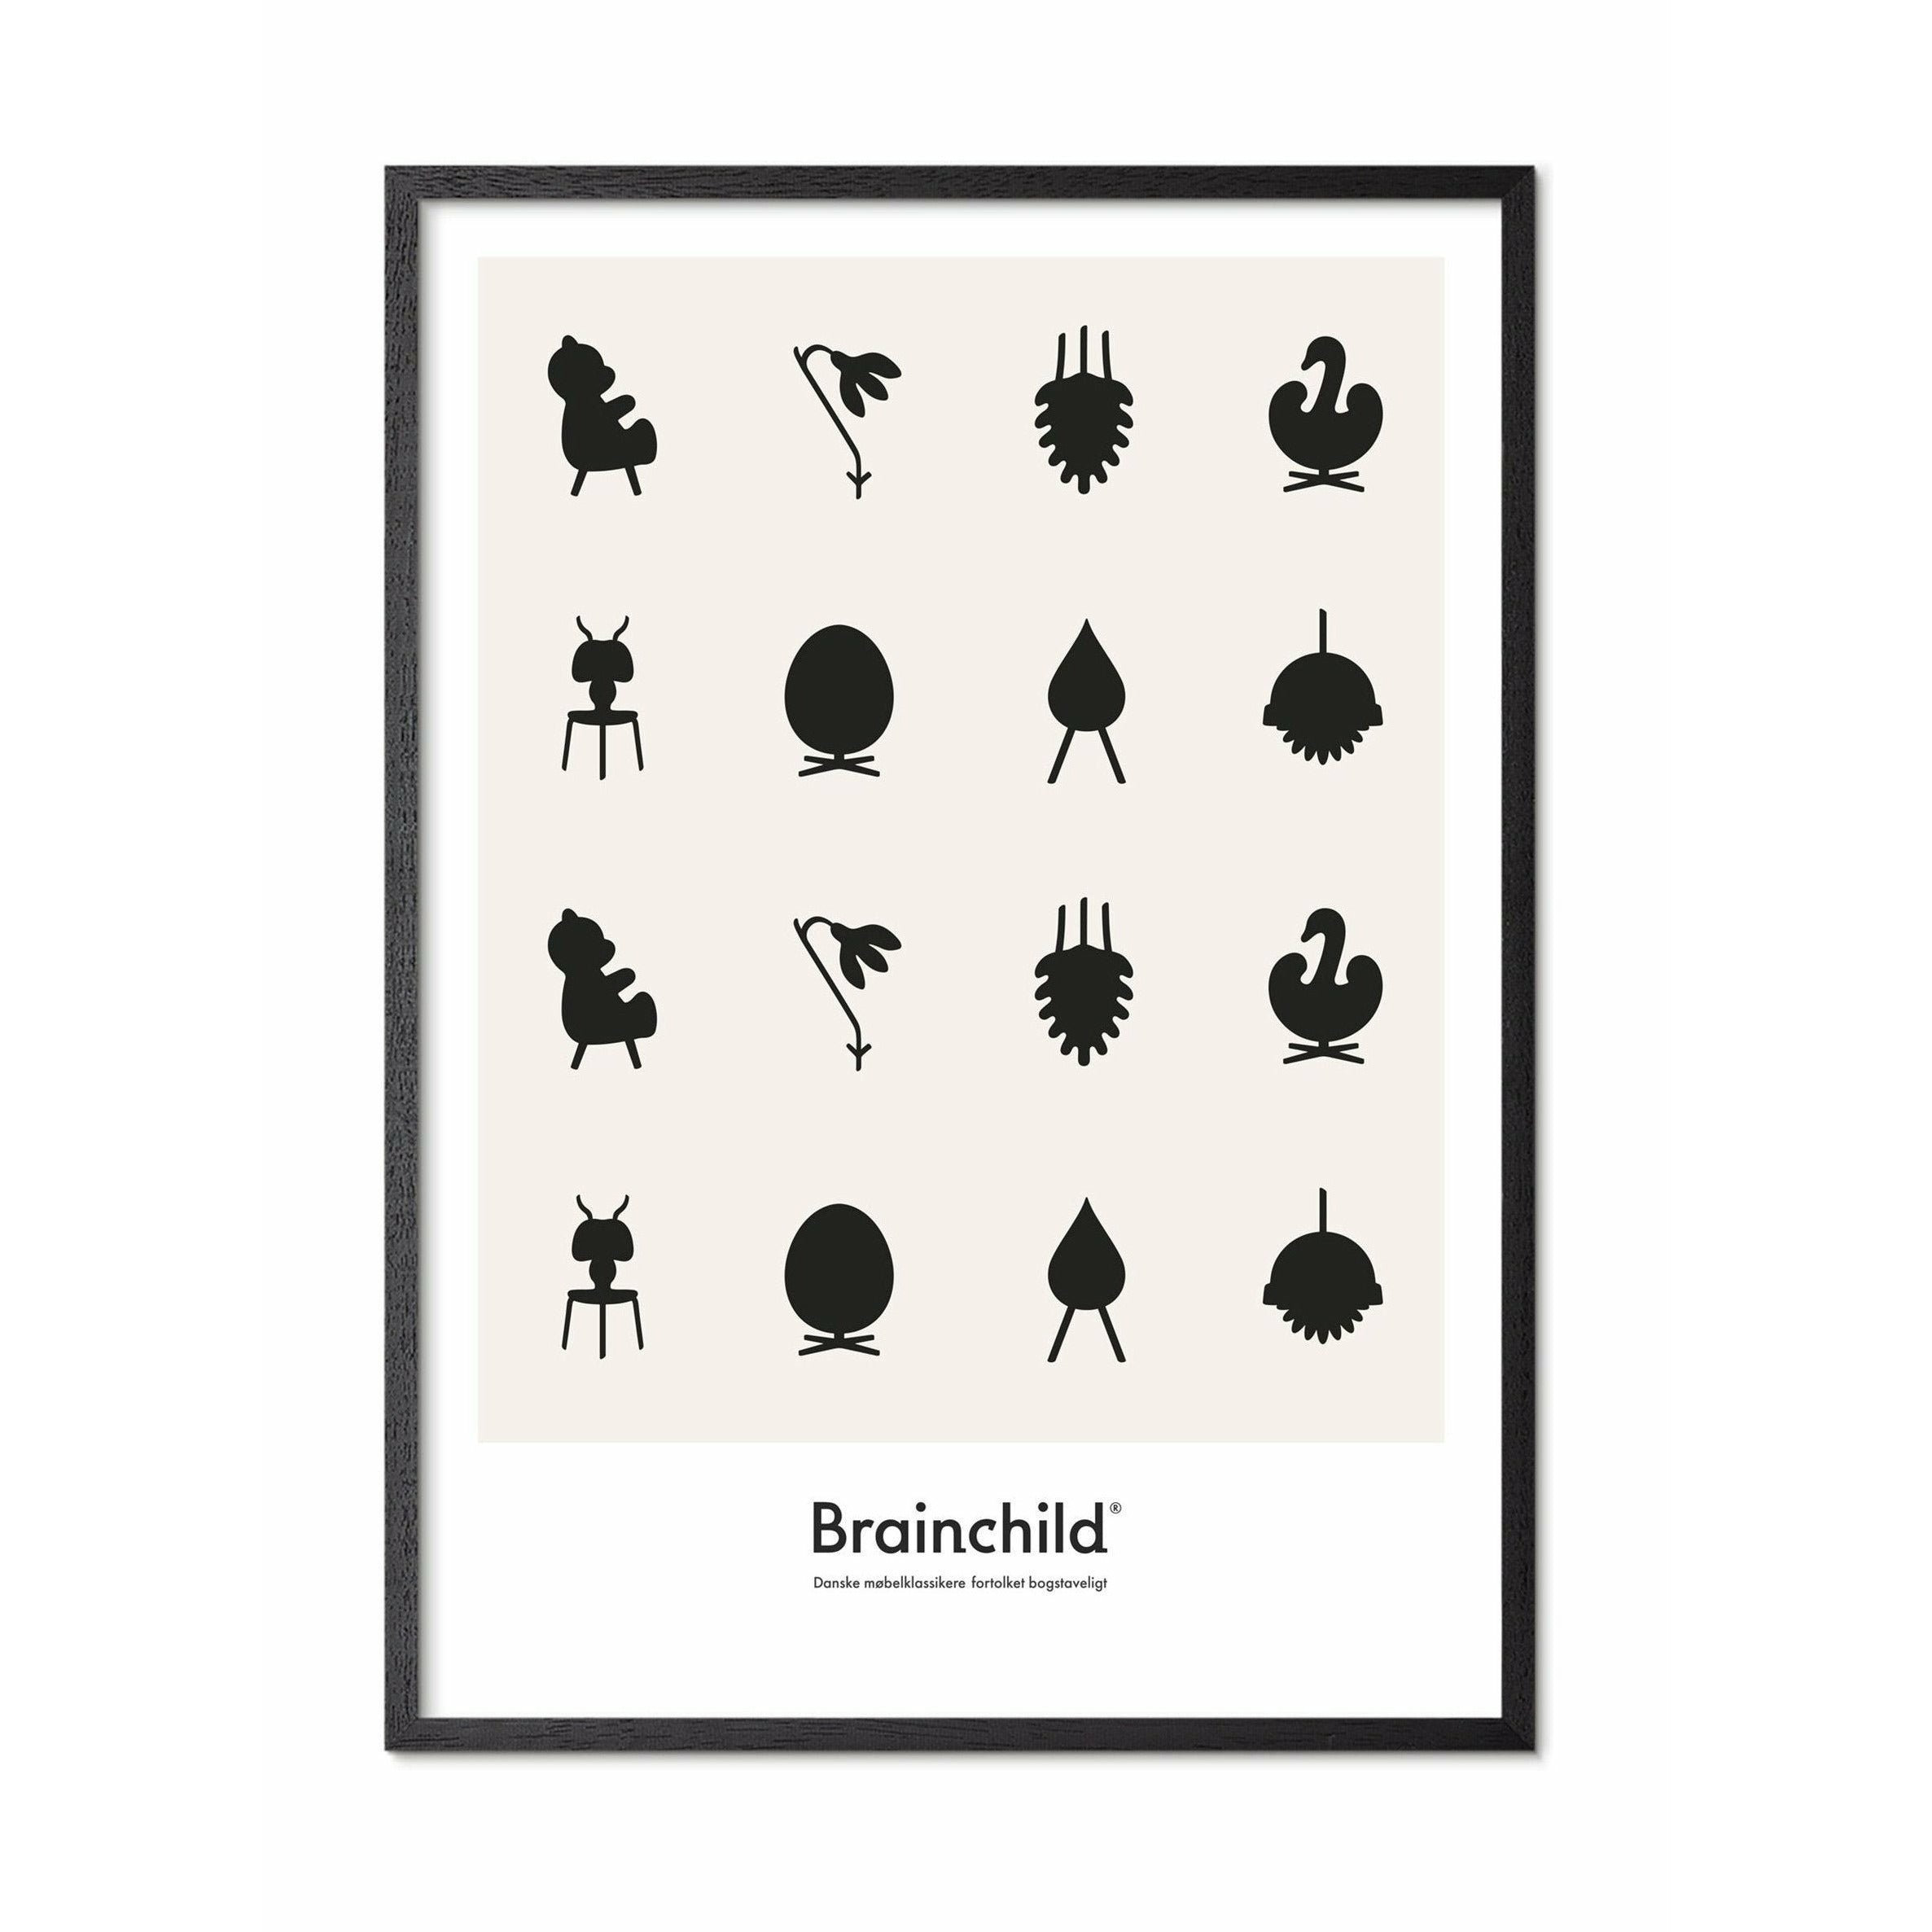 Brainchild Design Icon Poster, Rahmen aus schwarz lackiertem Holz 30x40 Cm, grau